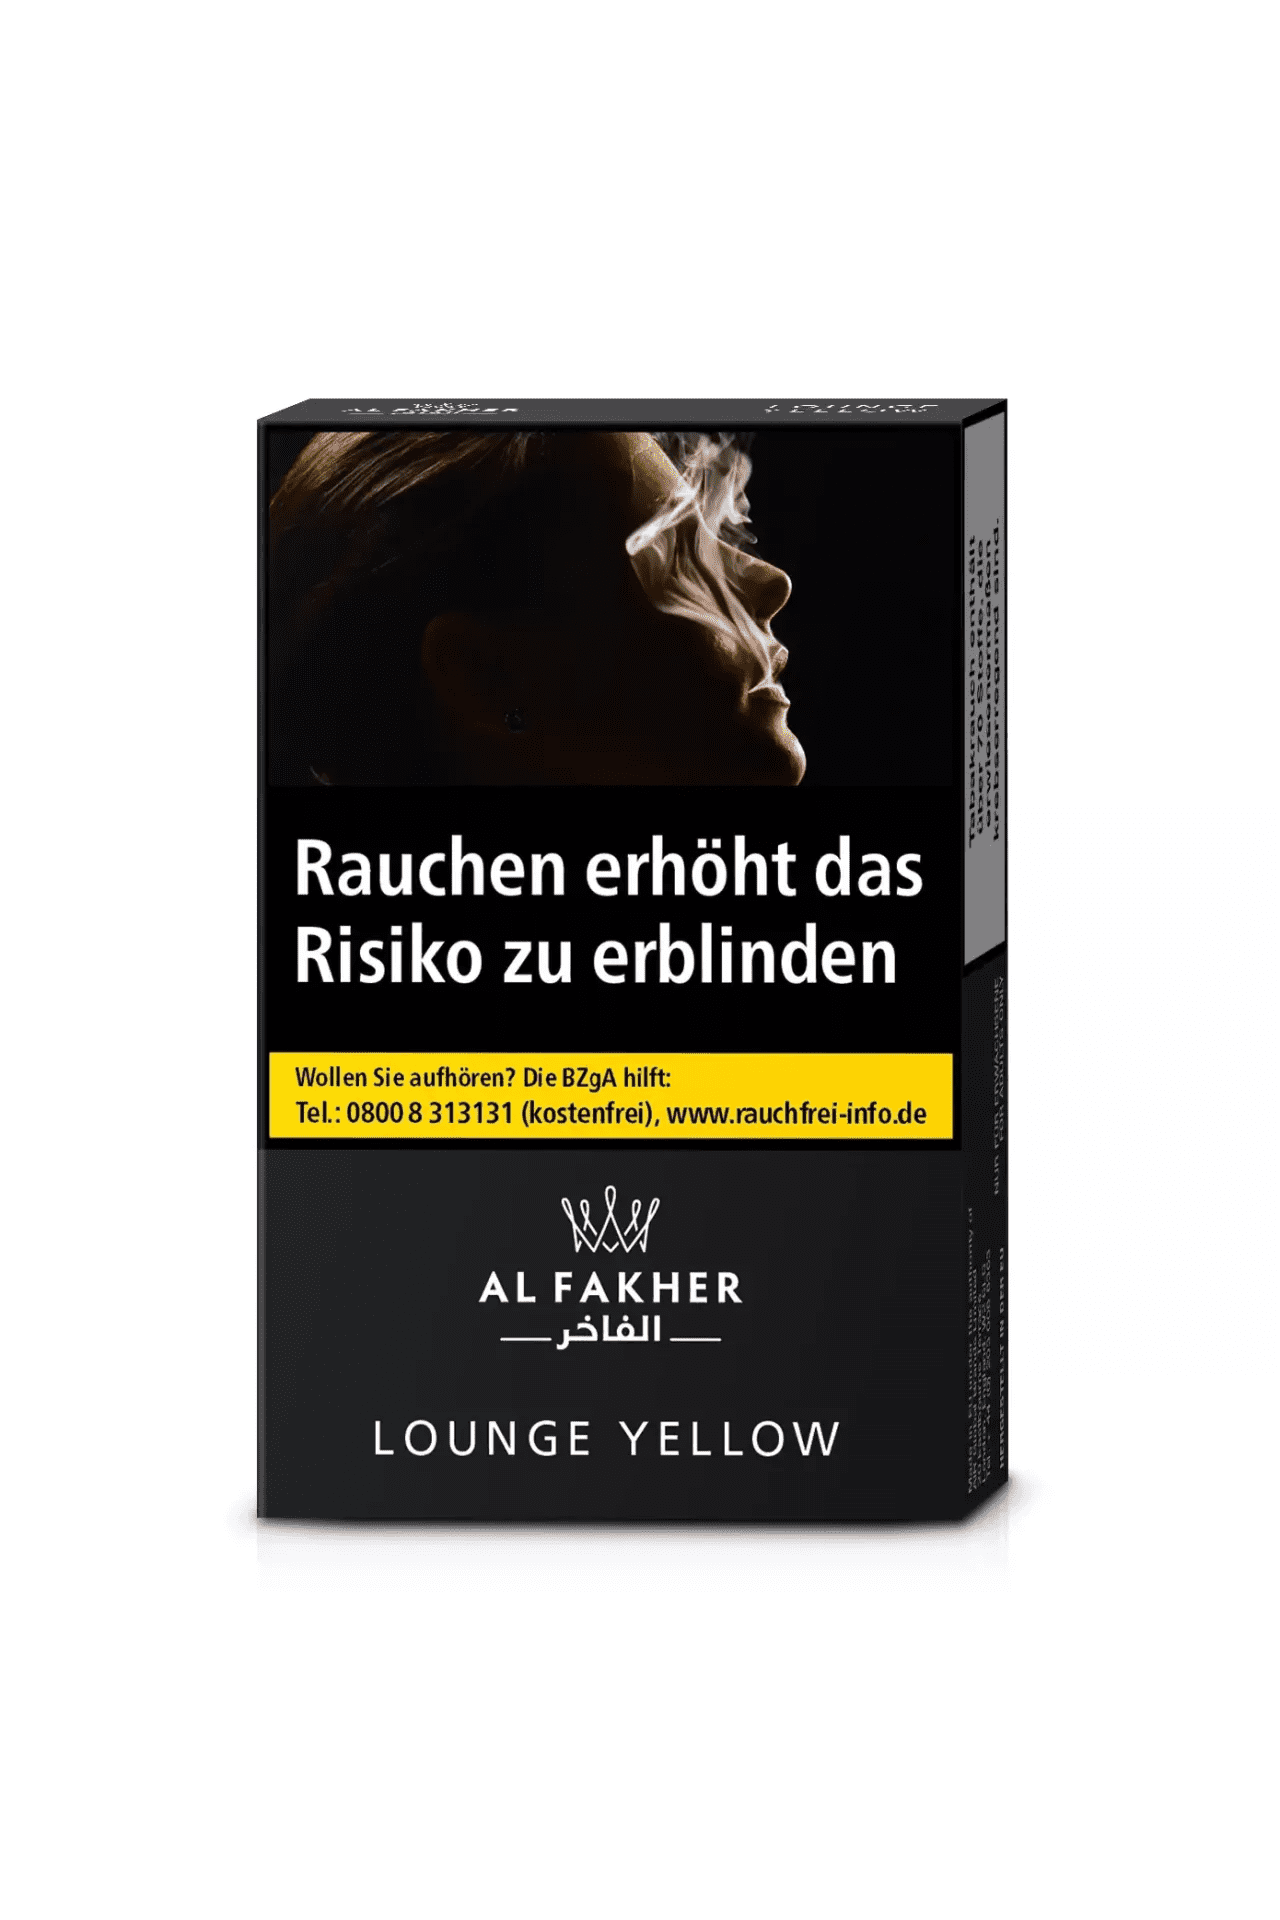 Al Fakher - Lounge Yellow 20g